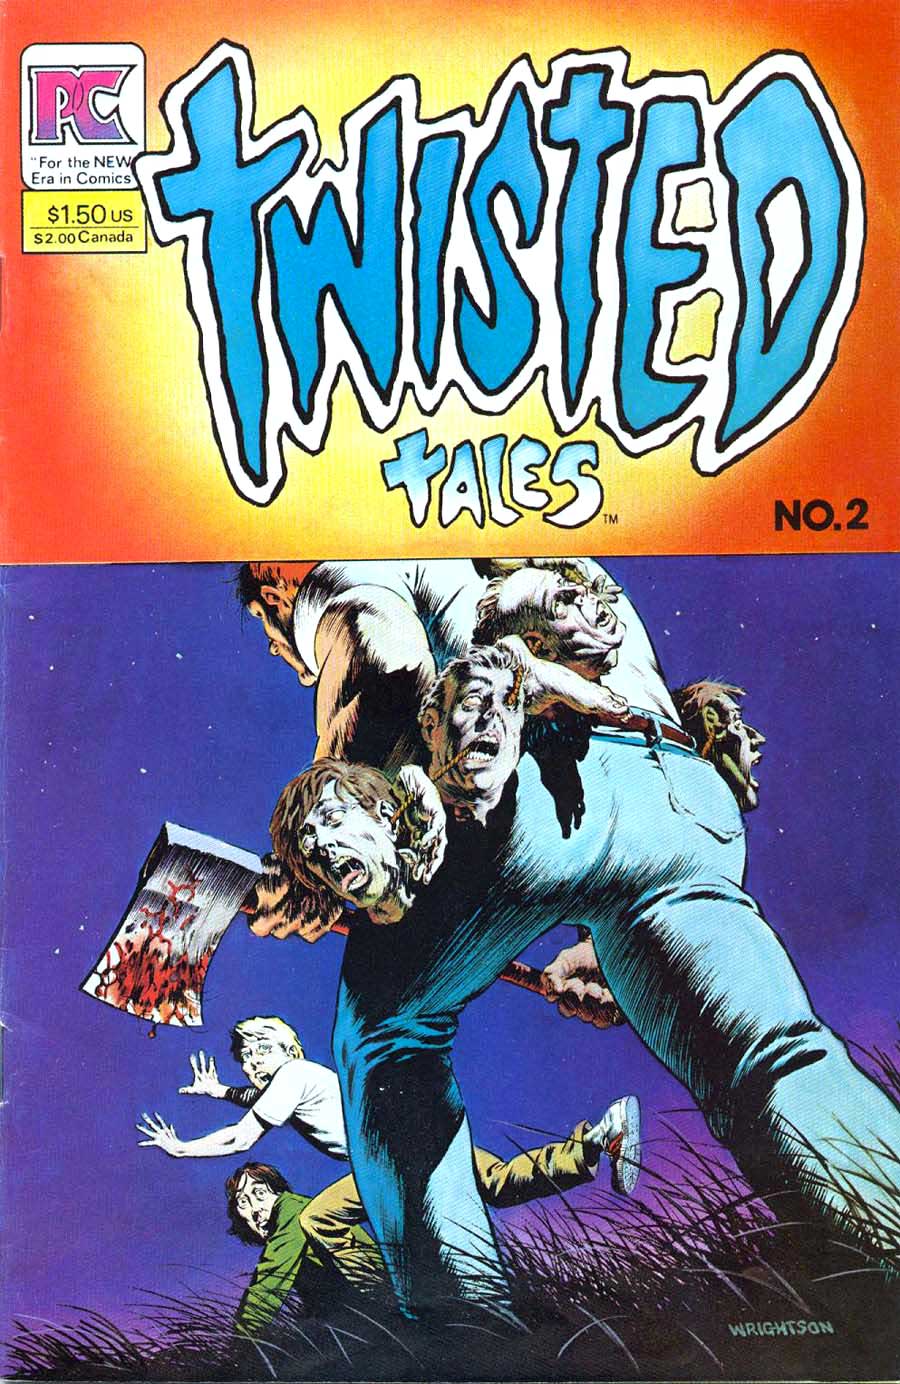 Twisted Tales v1 #2 - Bernie Wrightson 1980s horror comic book cover art